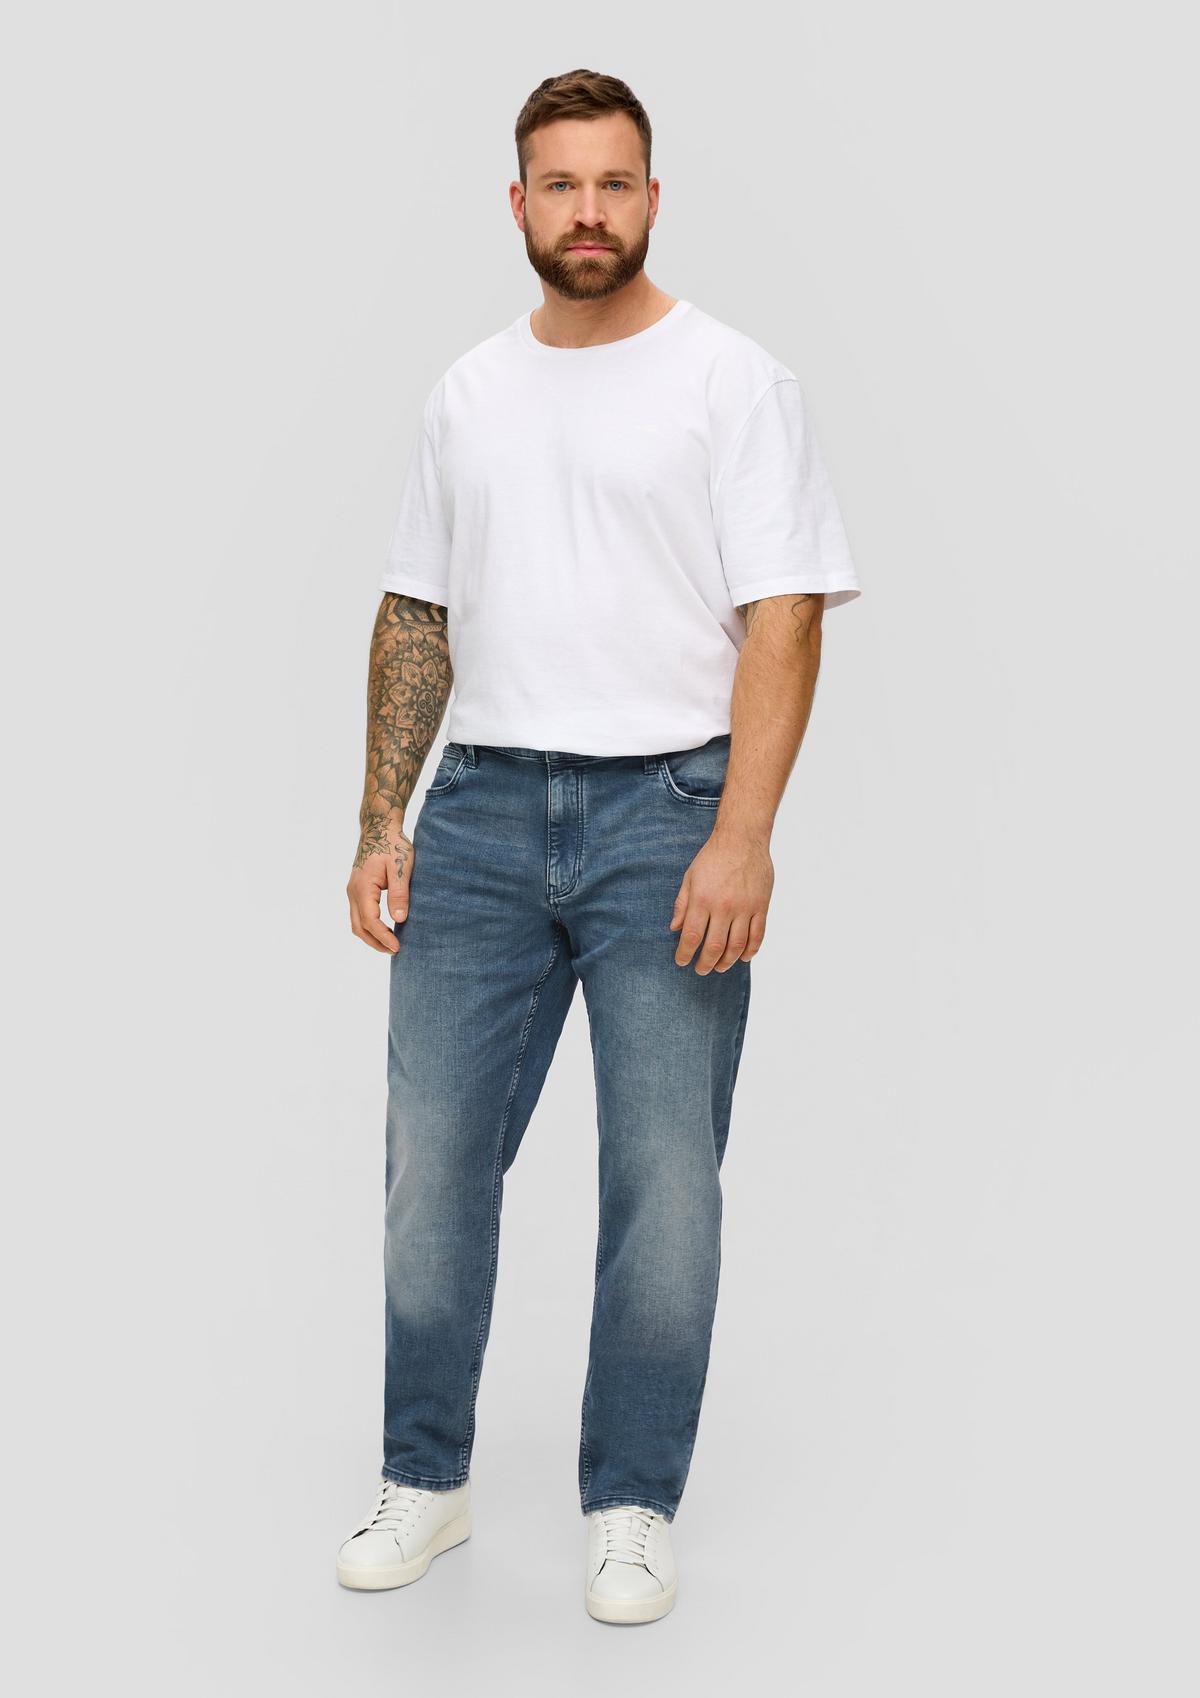 York regular / mid blue rise fit / - regular leg / jeans